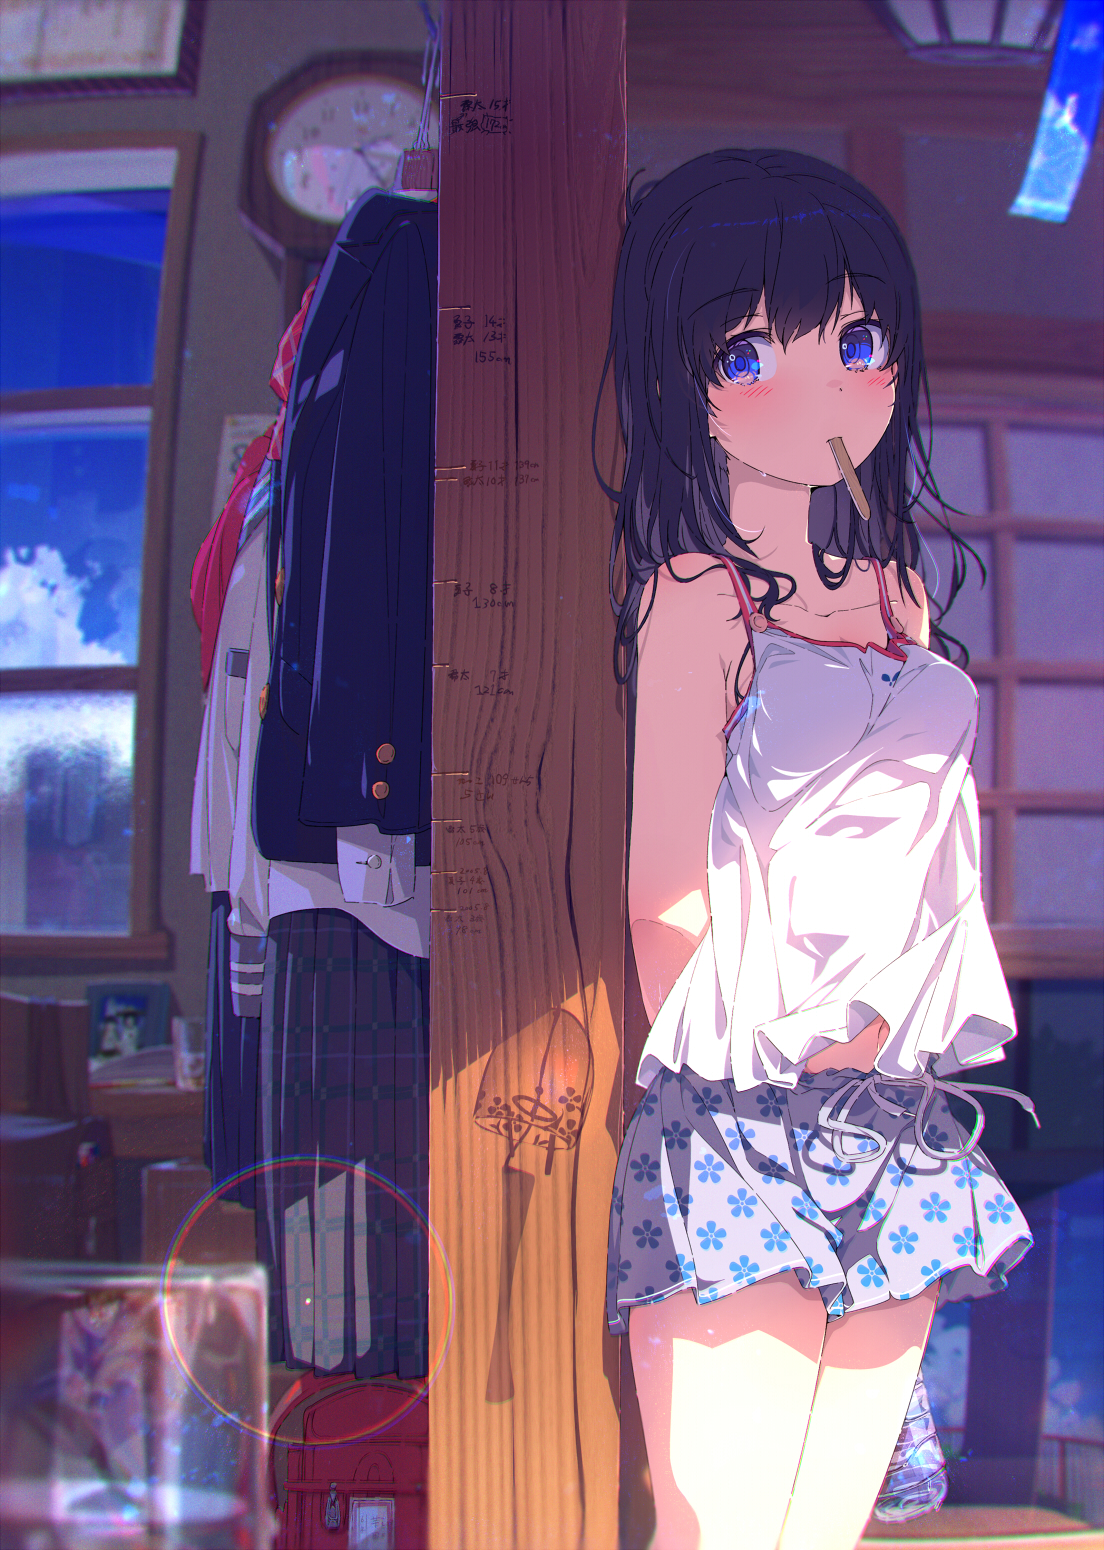 Pixiv Artwork Portrait Display Anime Girls Blushing Shorts Sunlight Clothes Window Clocks Ogipote 1104x1550